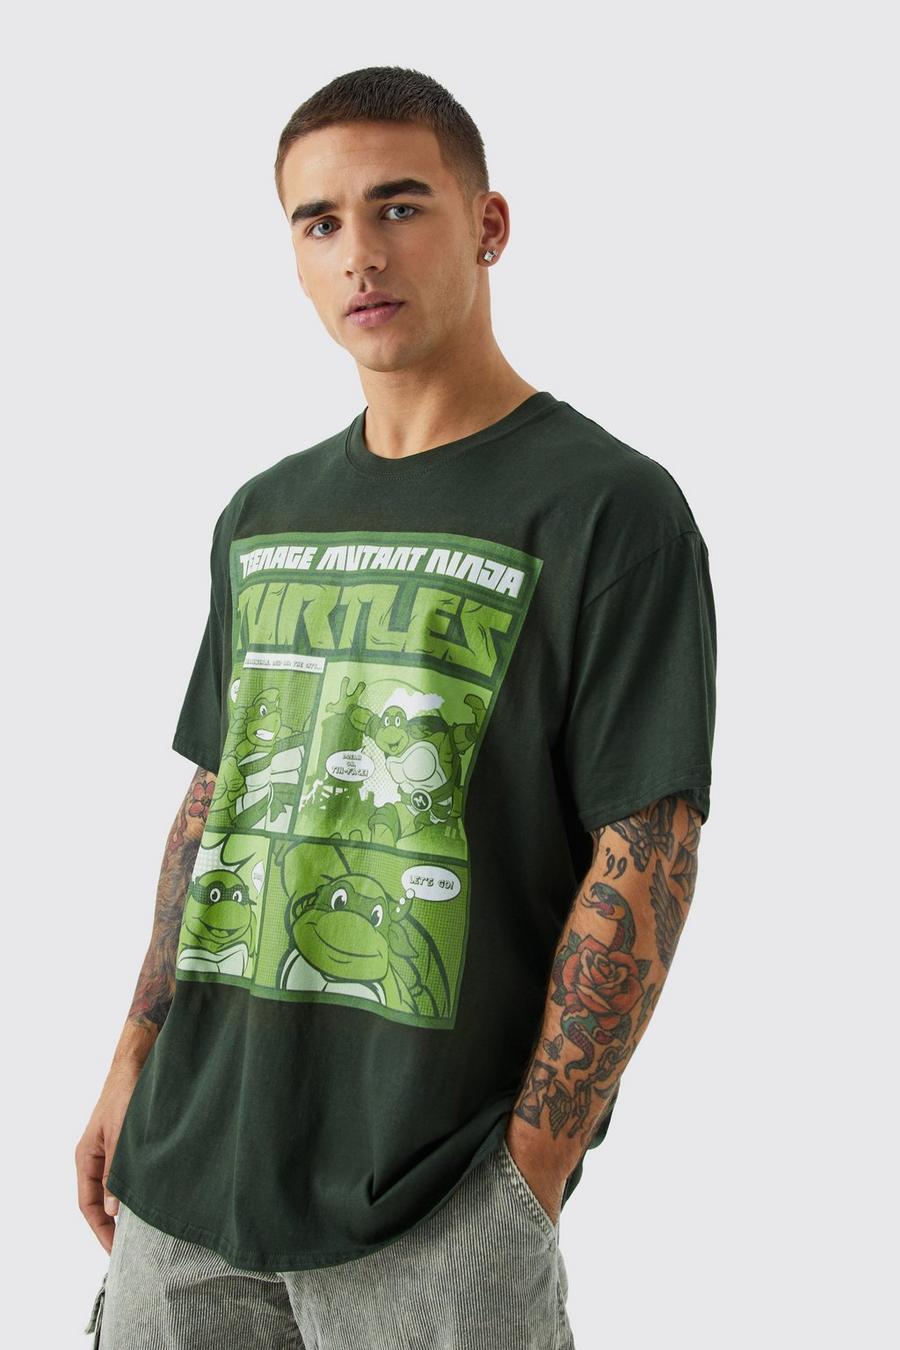 https://media.boohoo.com/i/boohoo/bmm64153_green_xl/male-green-oversized-tmnt-license-t-shirt/?w=900&qlt=default&fmt.jp2.qlt=70&fmt=auto&sm=fit